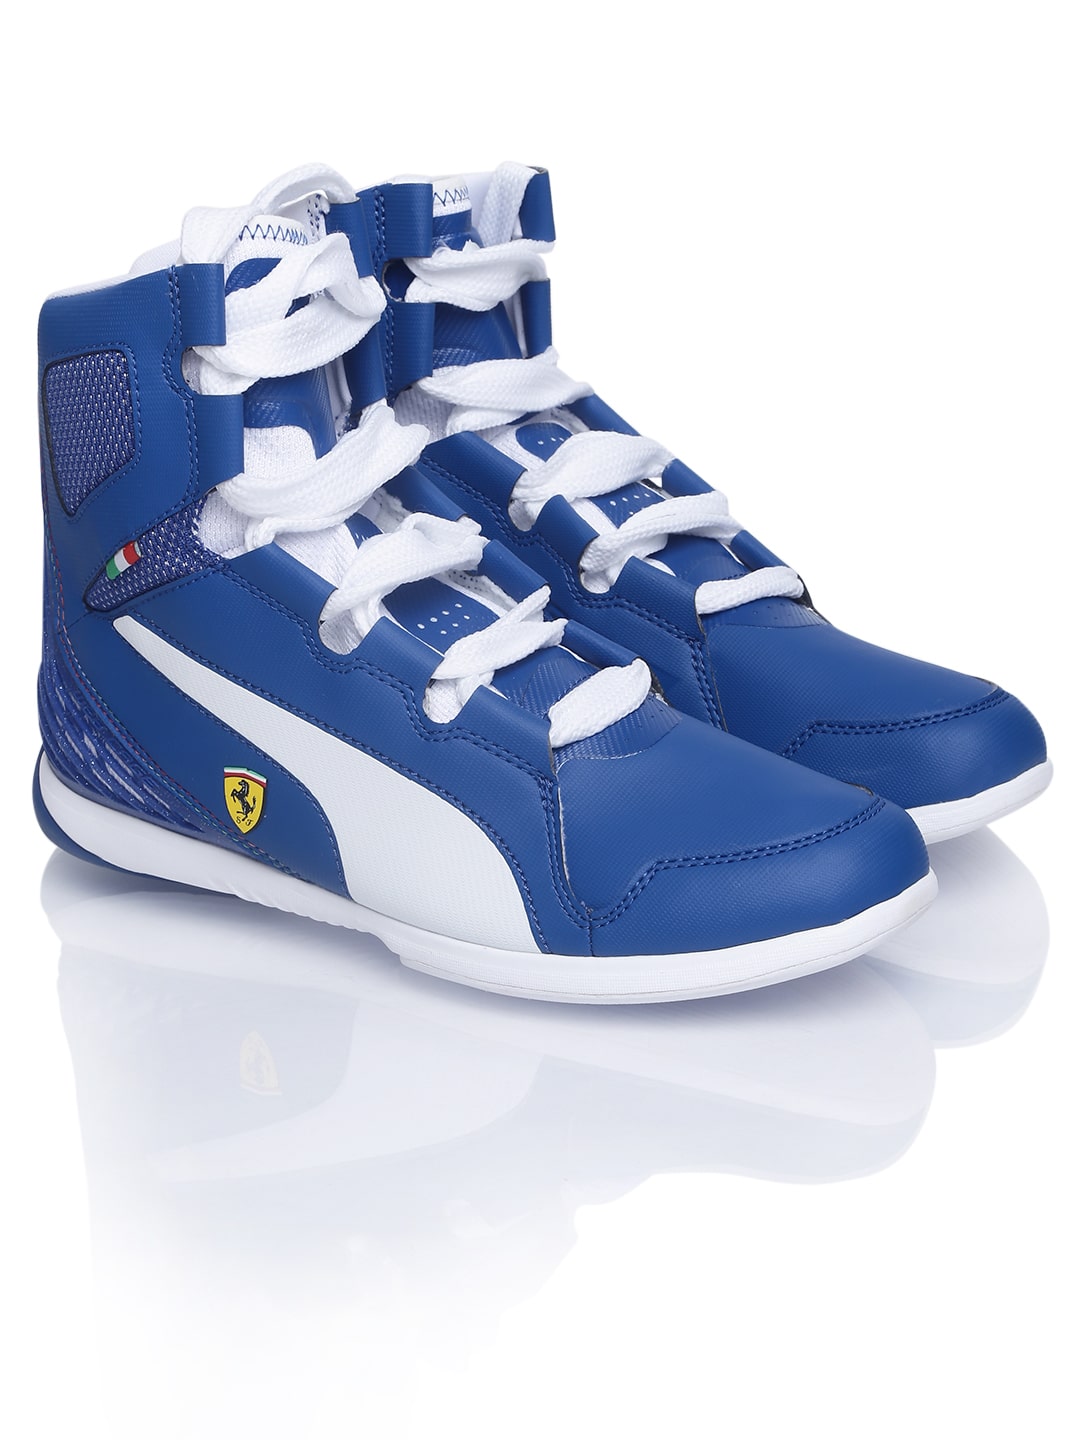 blue puma ferrari shoes